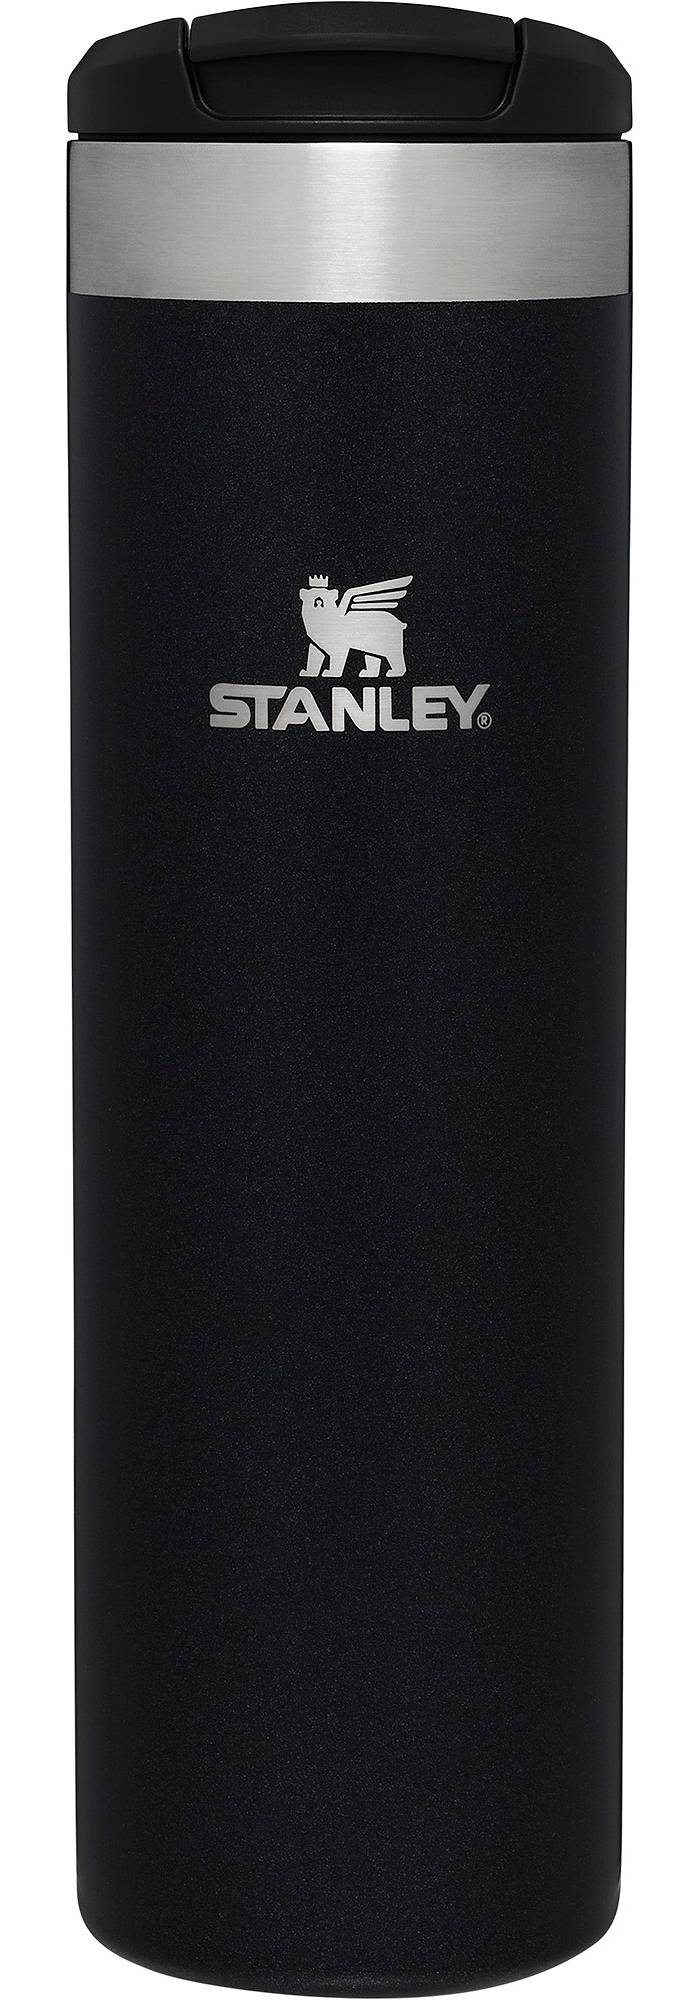  Stanley AeroLight Transit Bottle, Vacuum Insulated